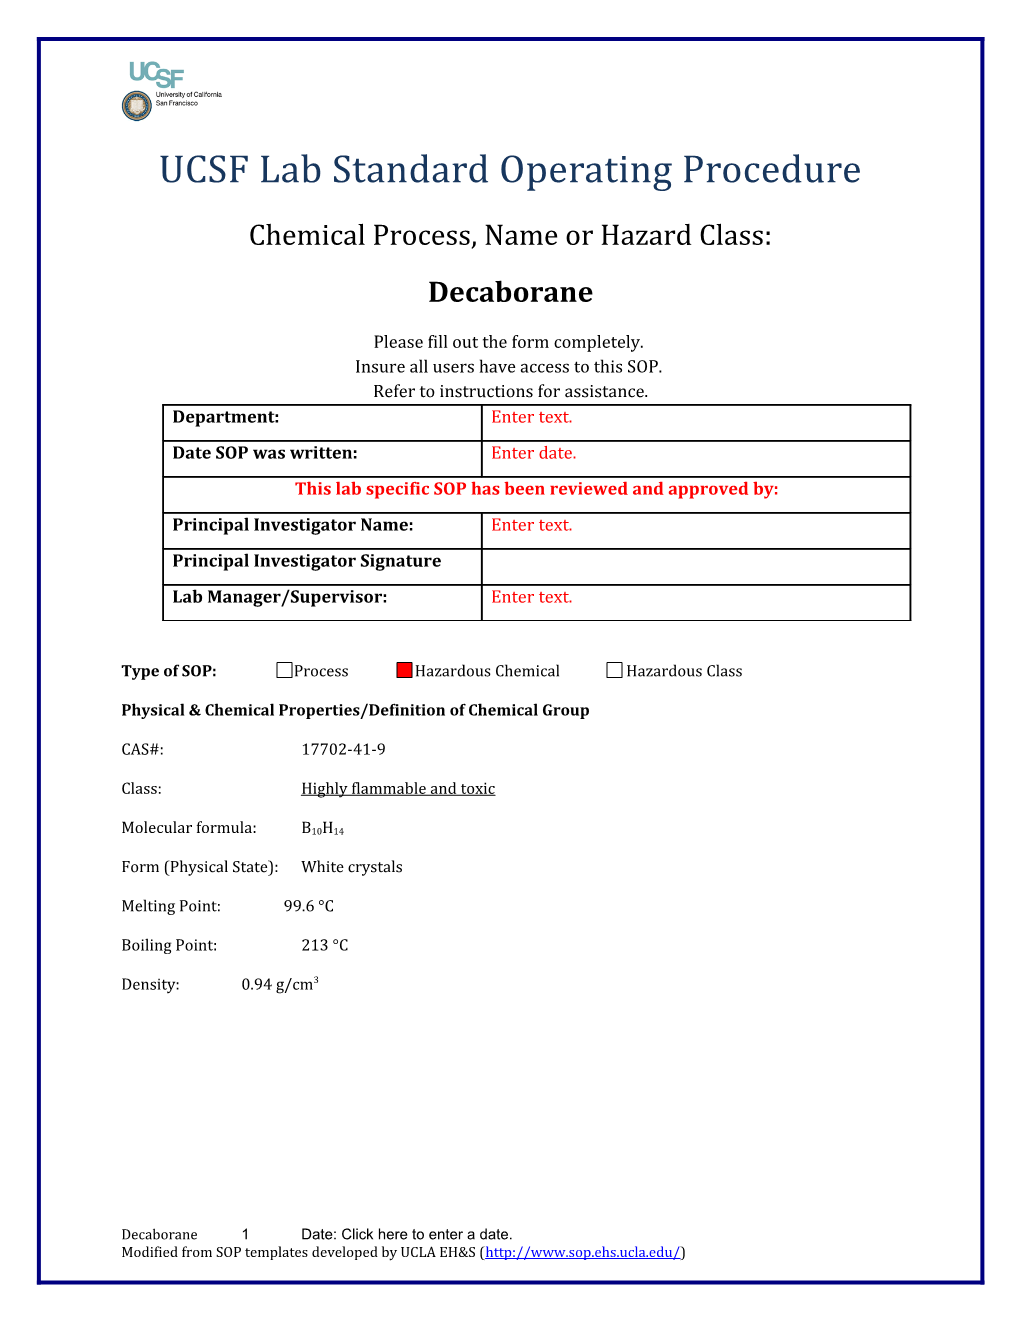 UCSF Lab Standard Operating Procedure s32